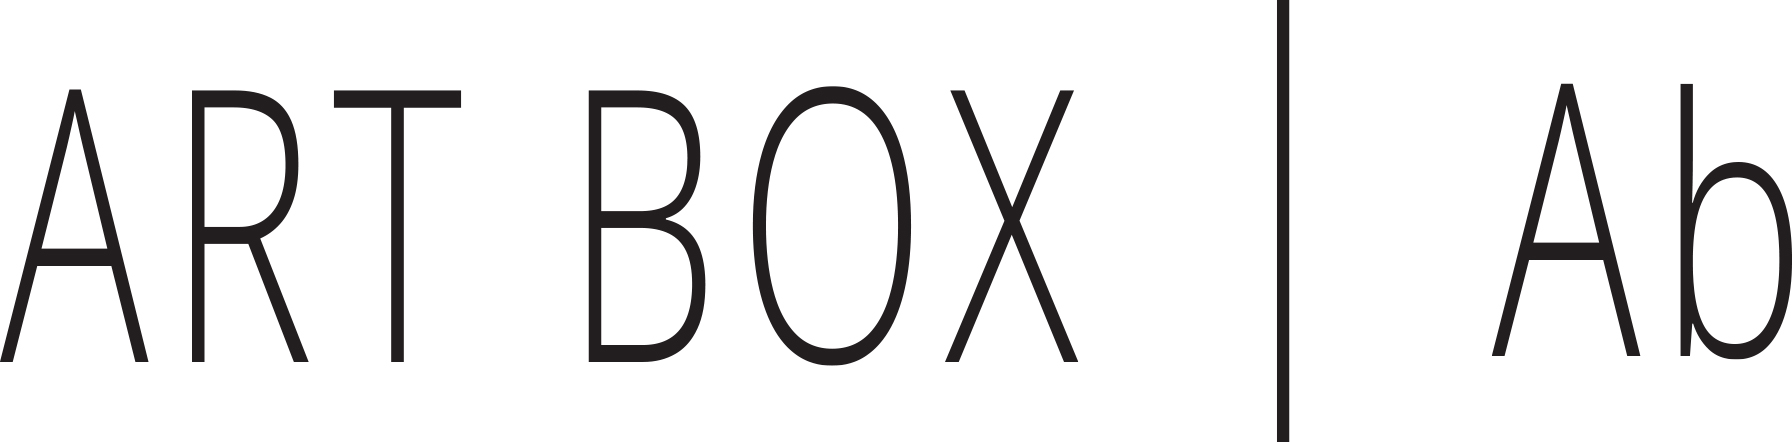 ART BOX - Logo_black